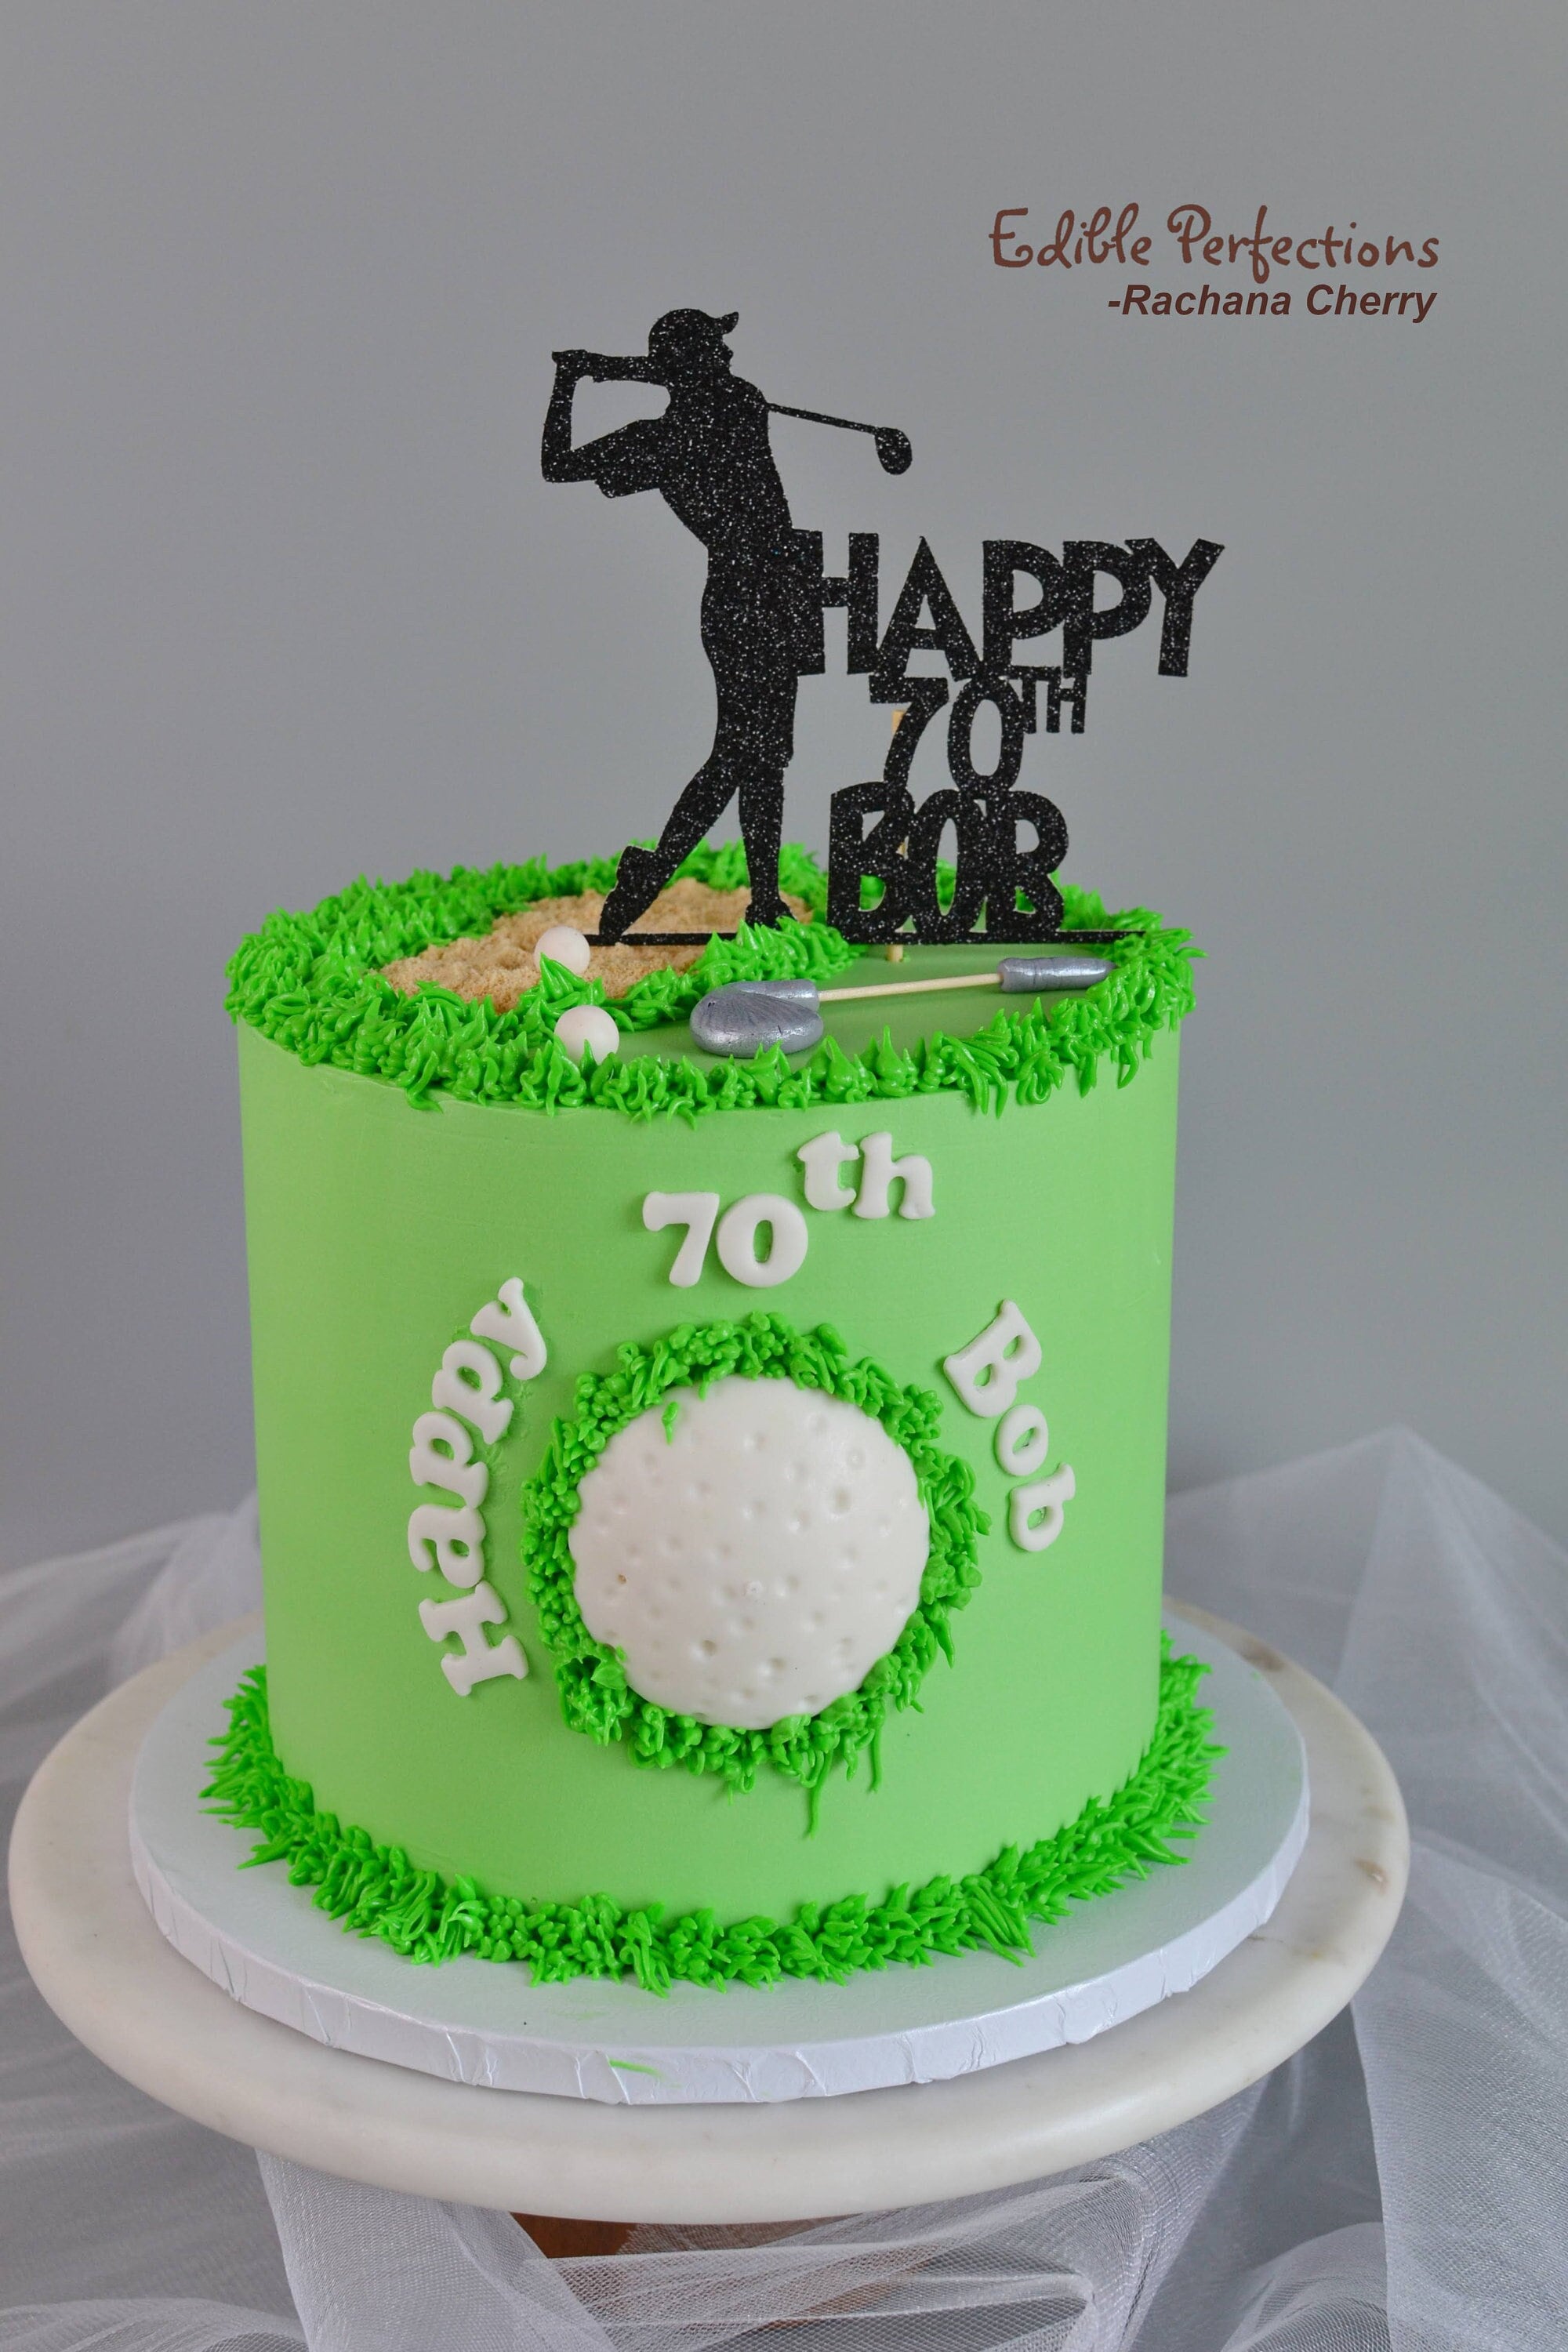 UT Golf Cake – Go Vols! | A Creative Mom!